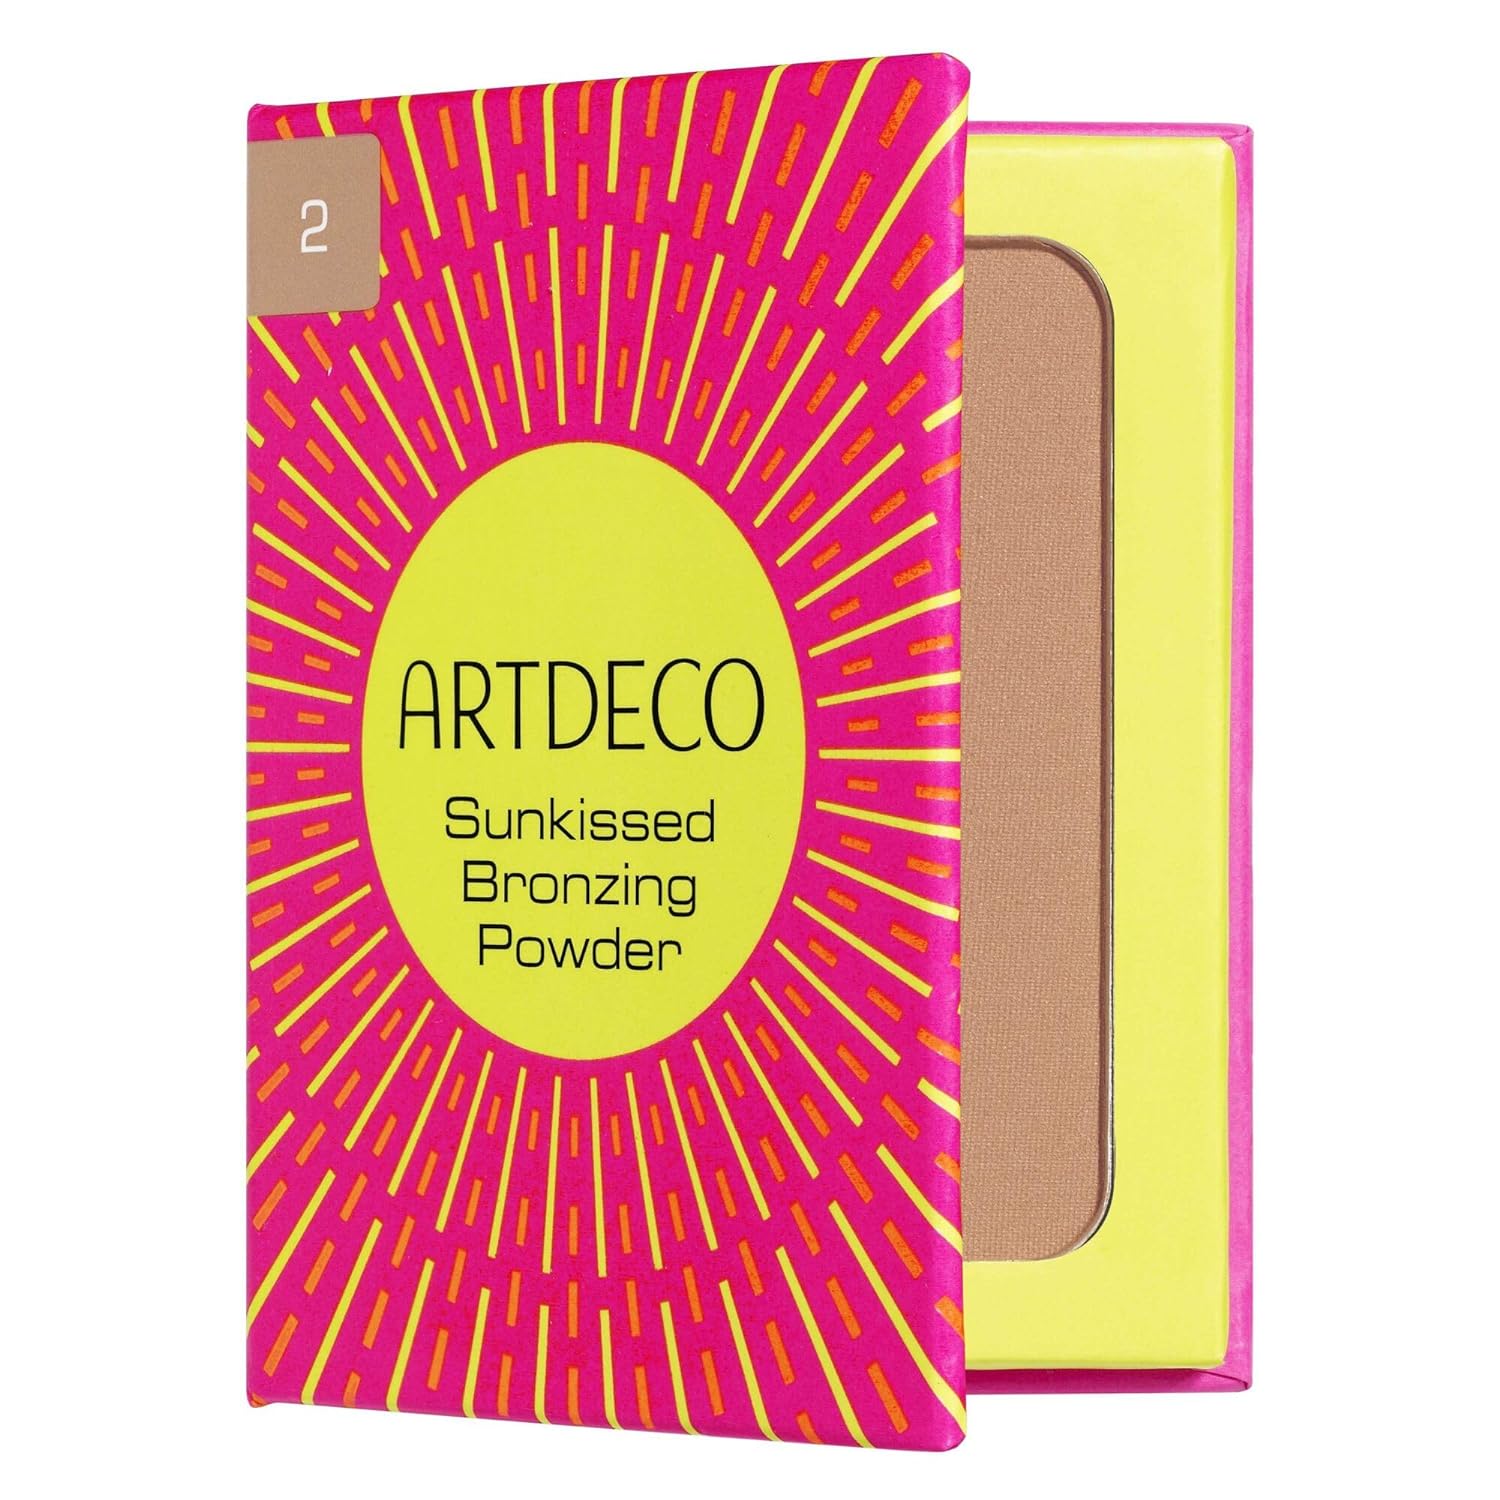 Artdeco Bronzing Powder Compact long-lasting refill pack.
